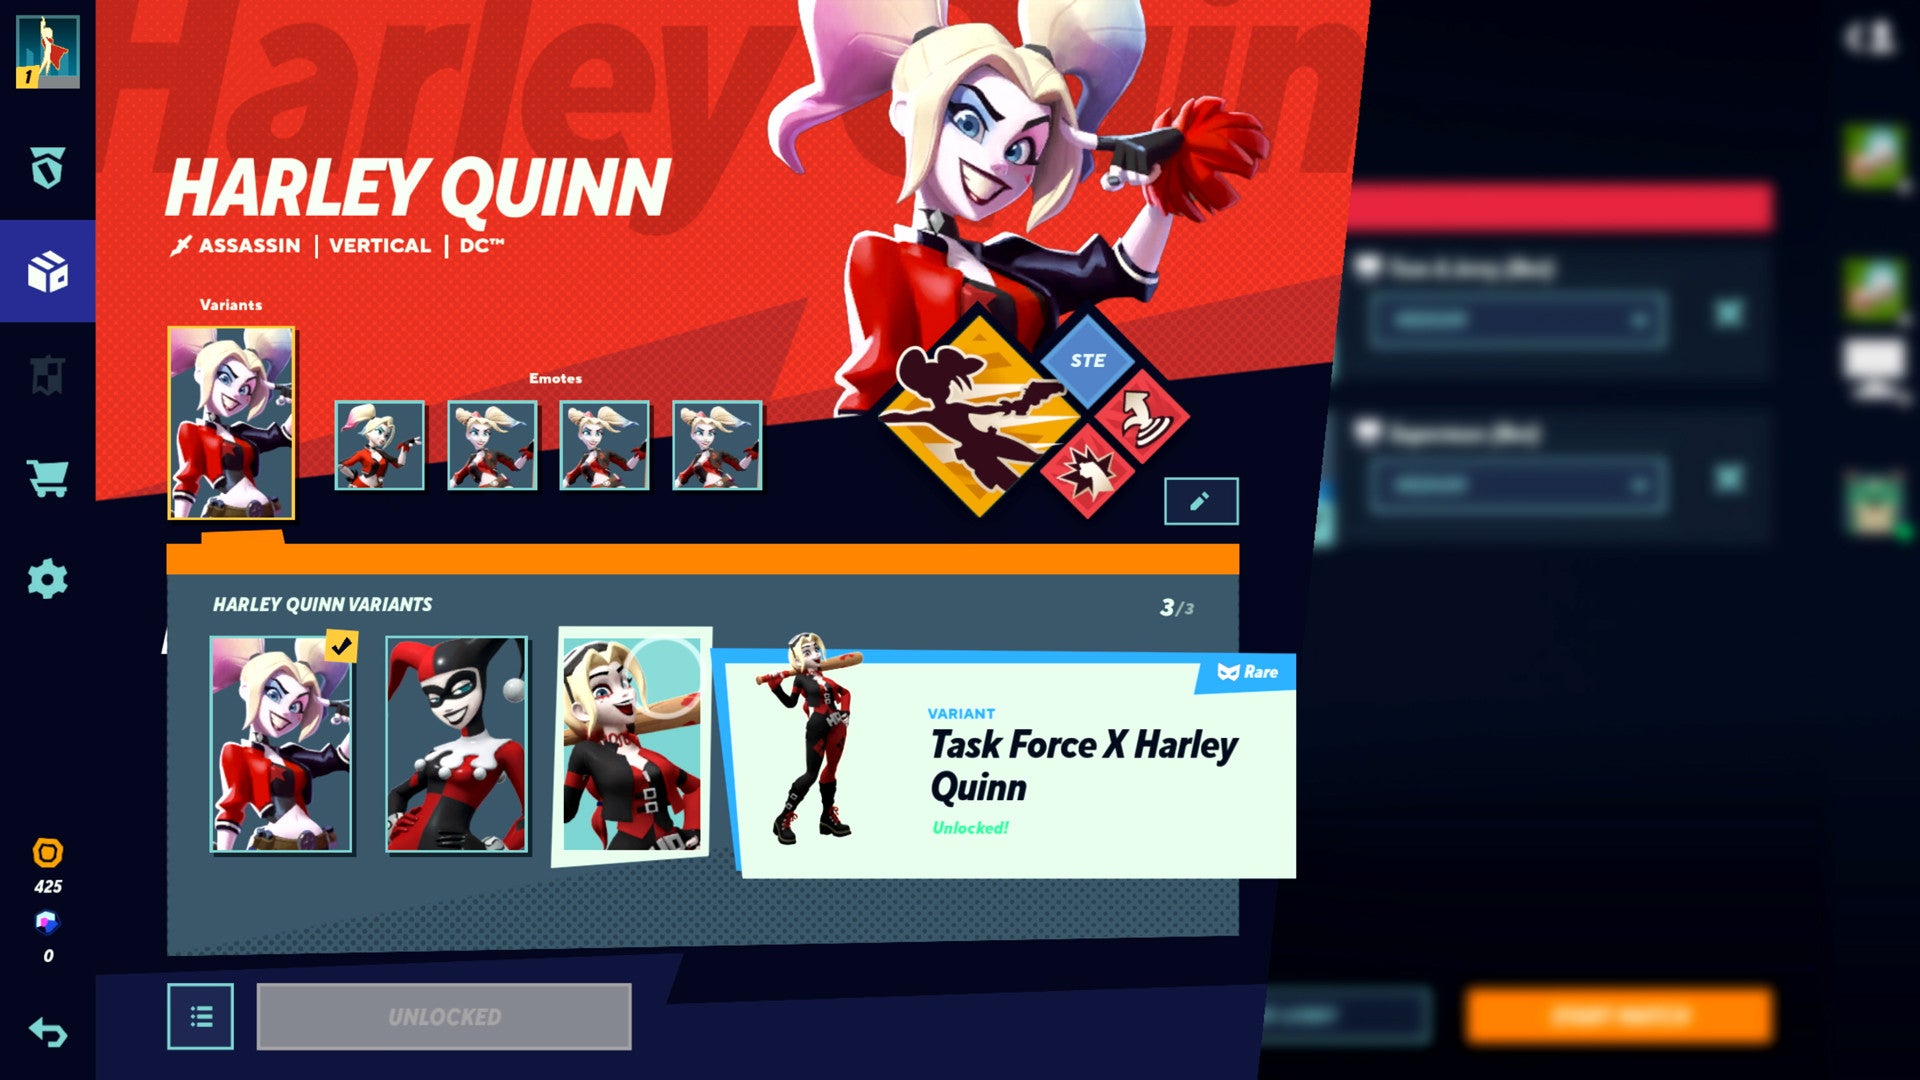 Menu for Harley Quinn character